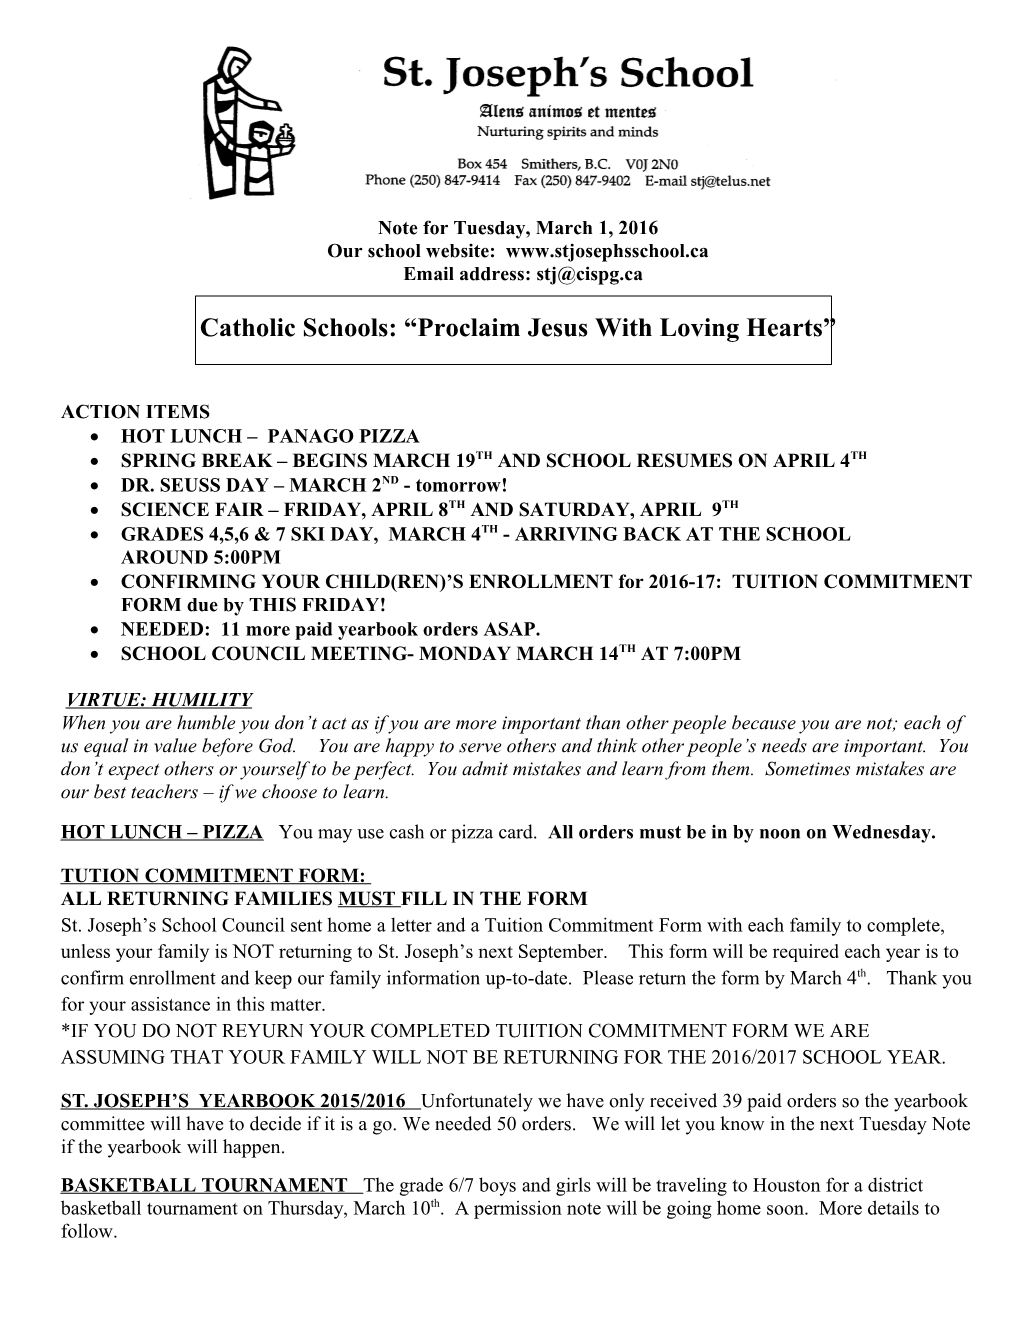 Catholic Schools: Proclaim Jesus with Loving Hearts